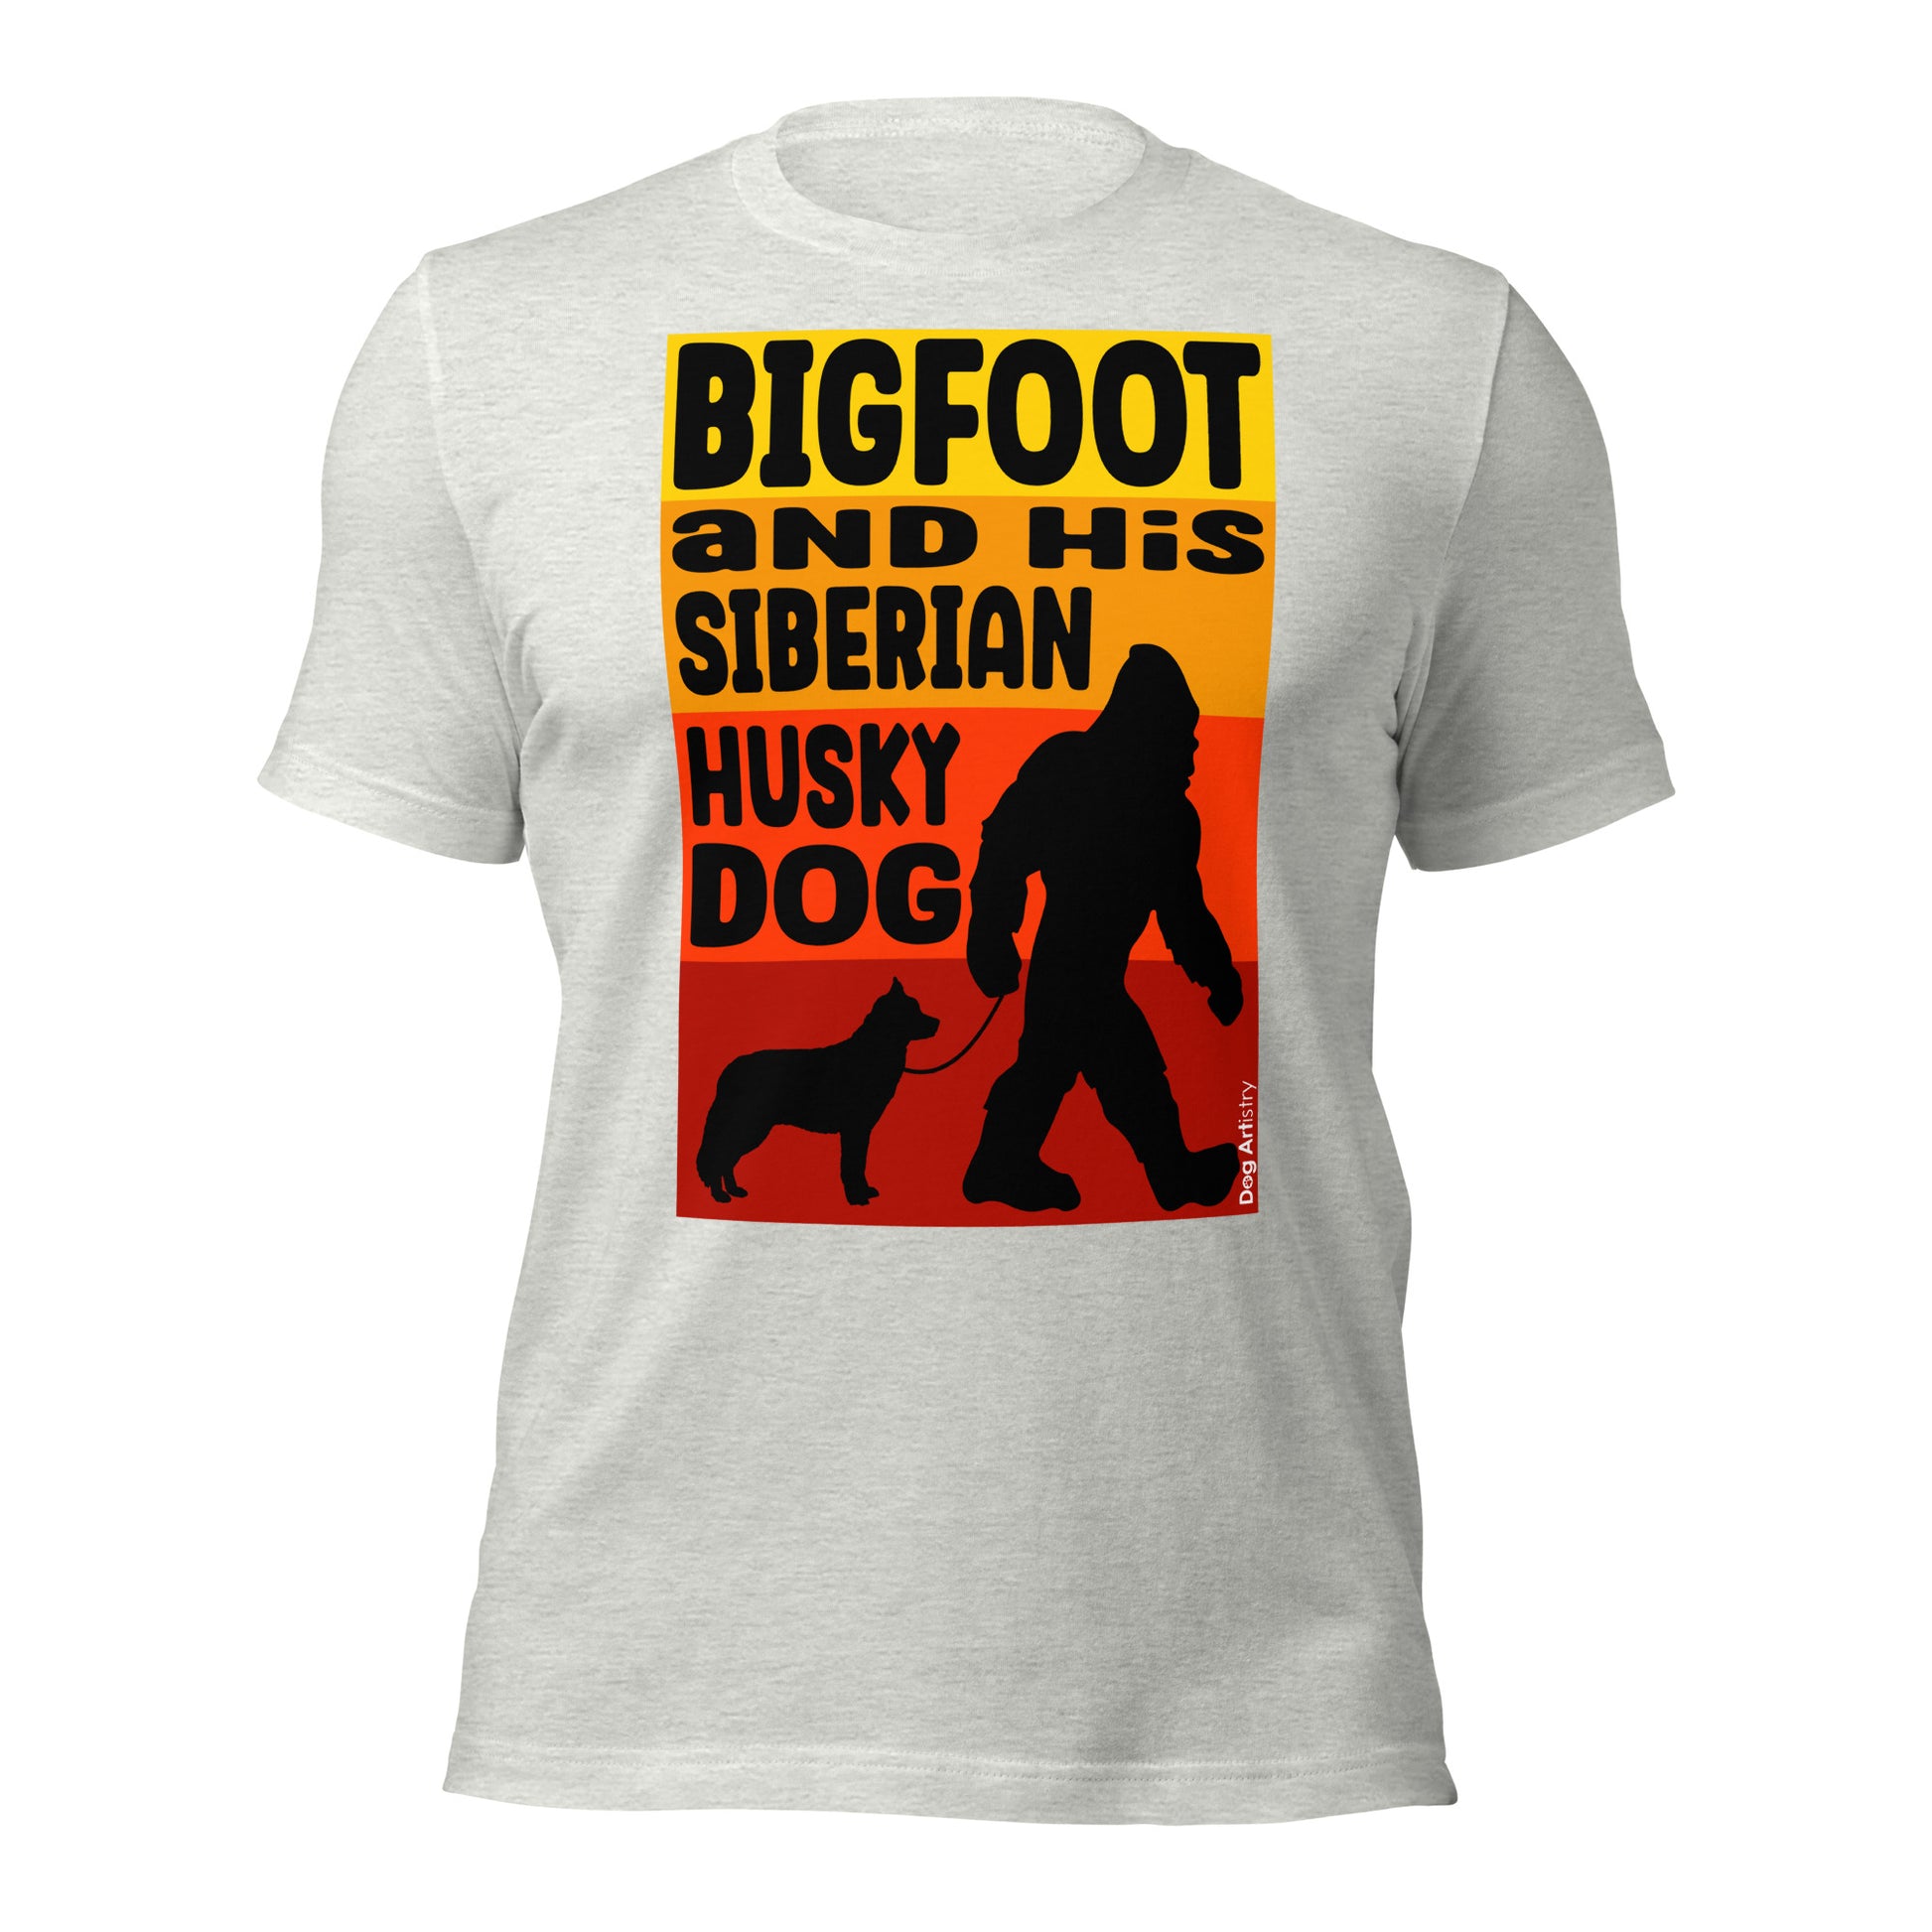 Bigfoot and his Siberian Husky dog unisex ash t-shirt by Dog Artistry.